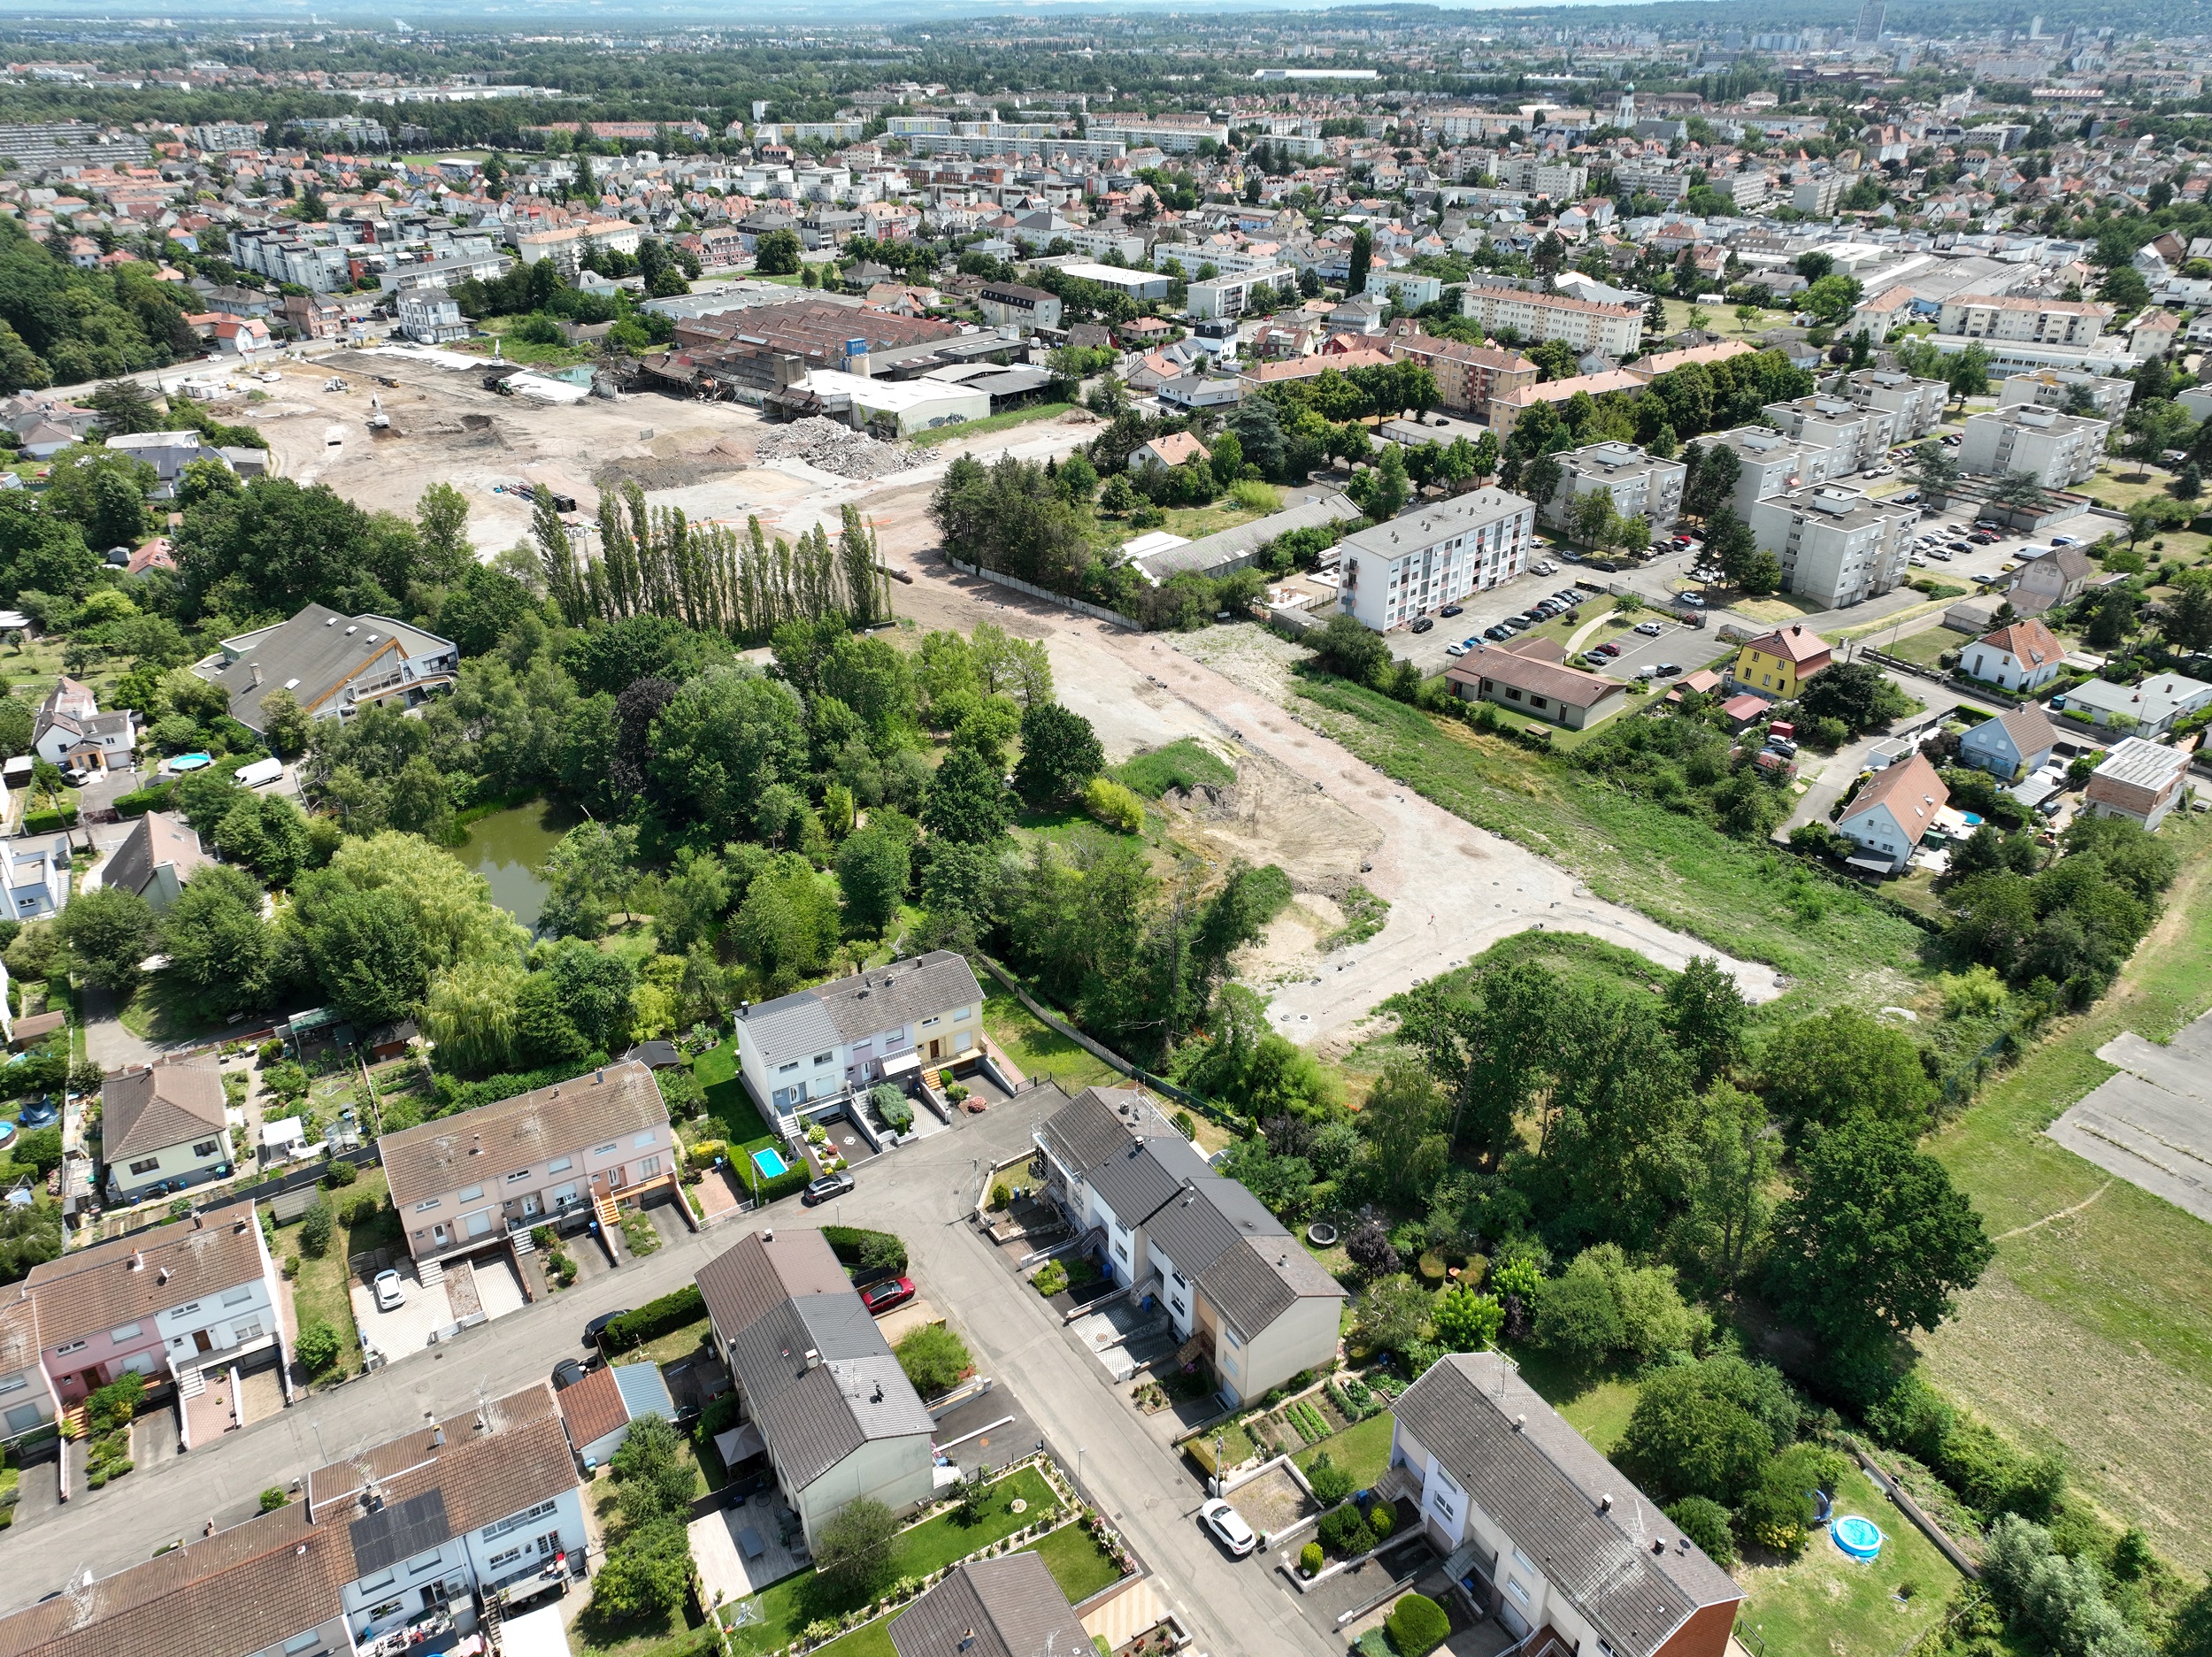 terre-et-developpement-lotissement-terre-ad-vitam-kingersheim-amenagement-travaux-vue-aerienne-terrain-viabilise